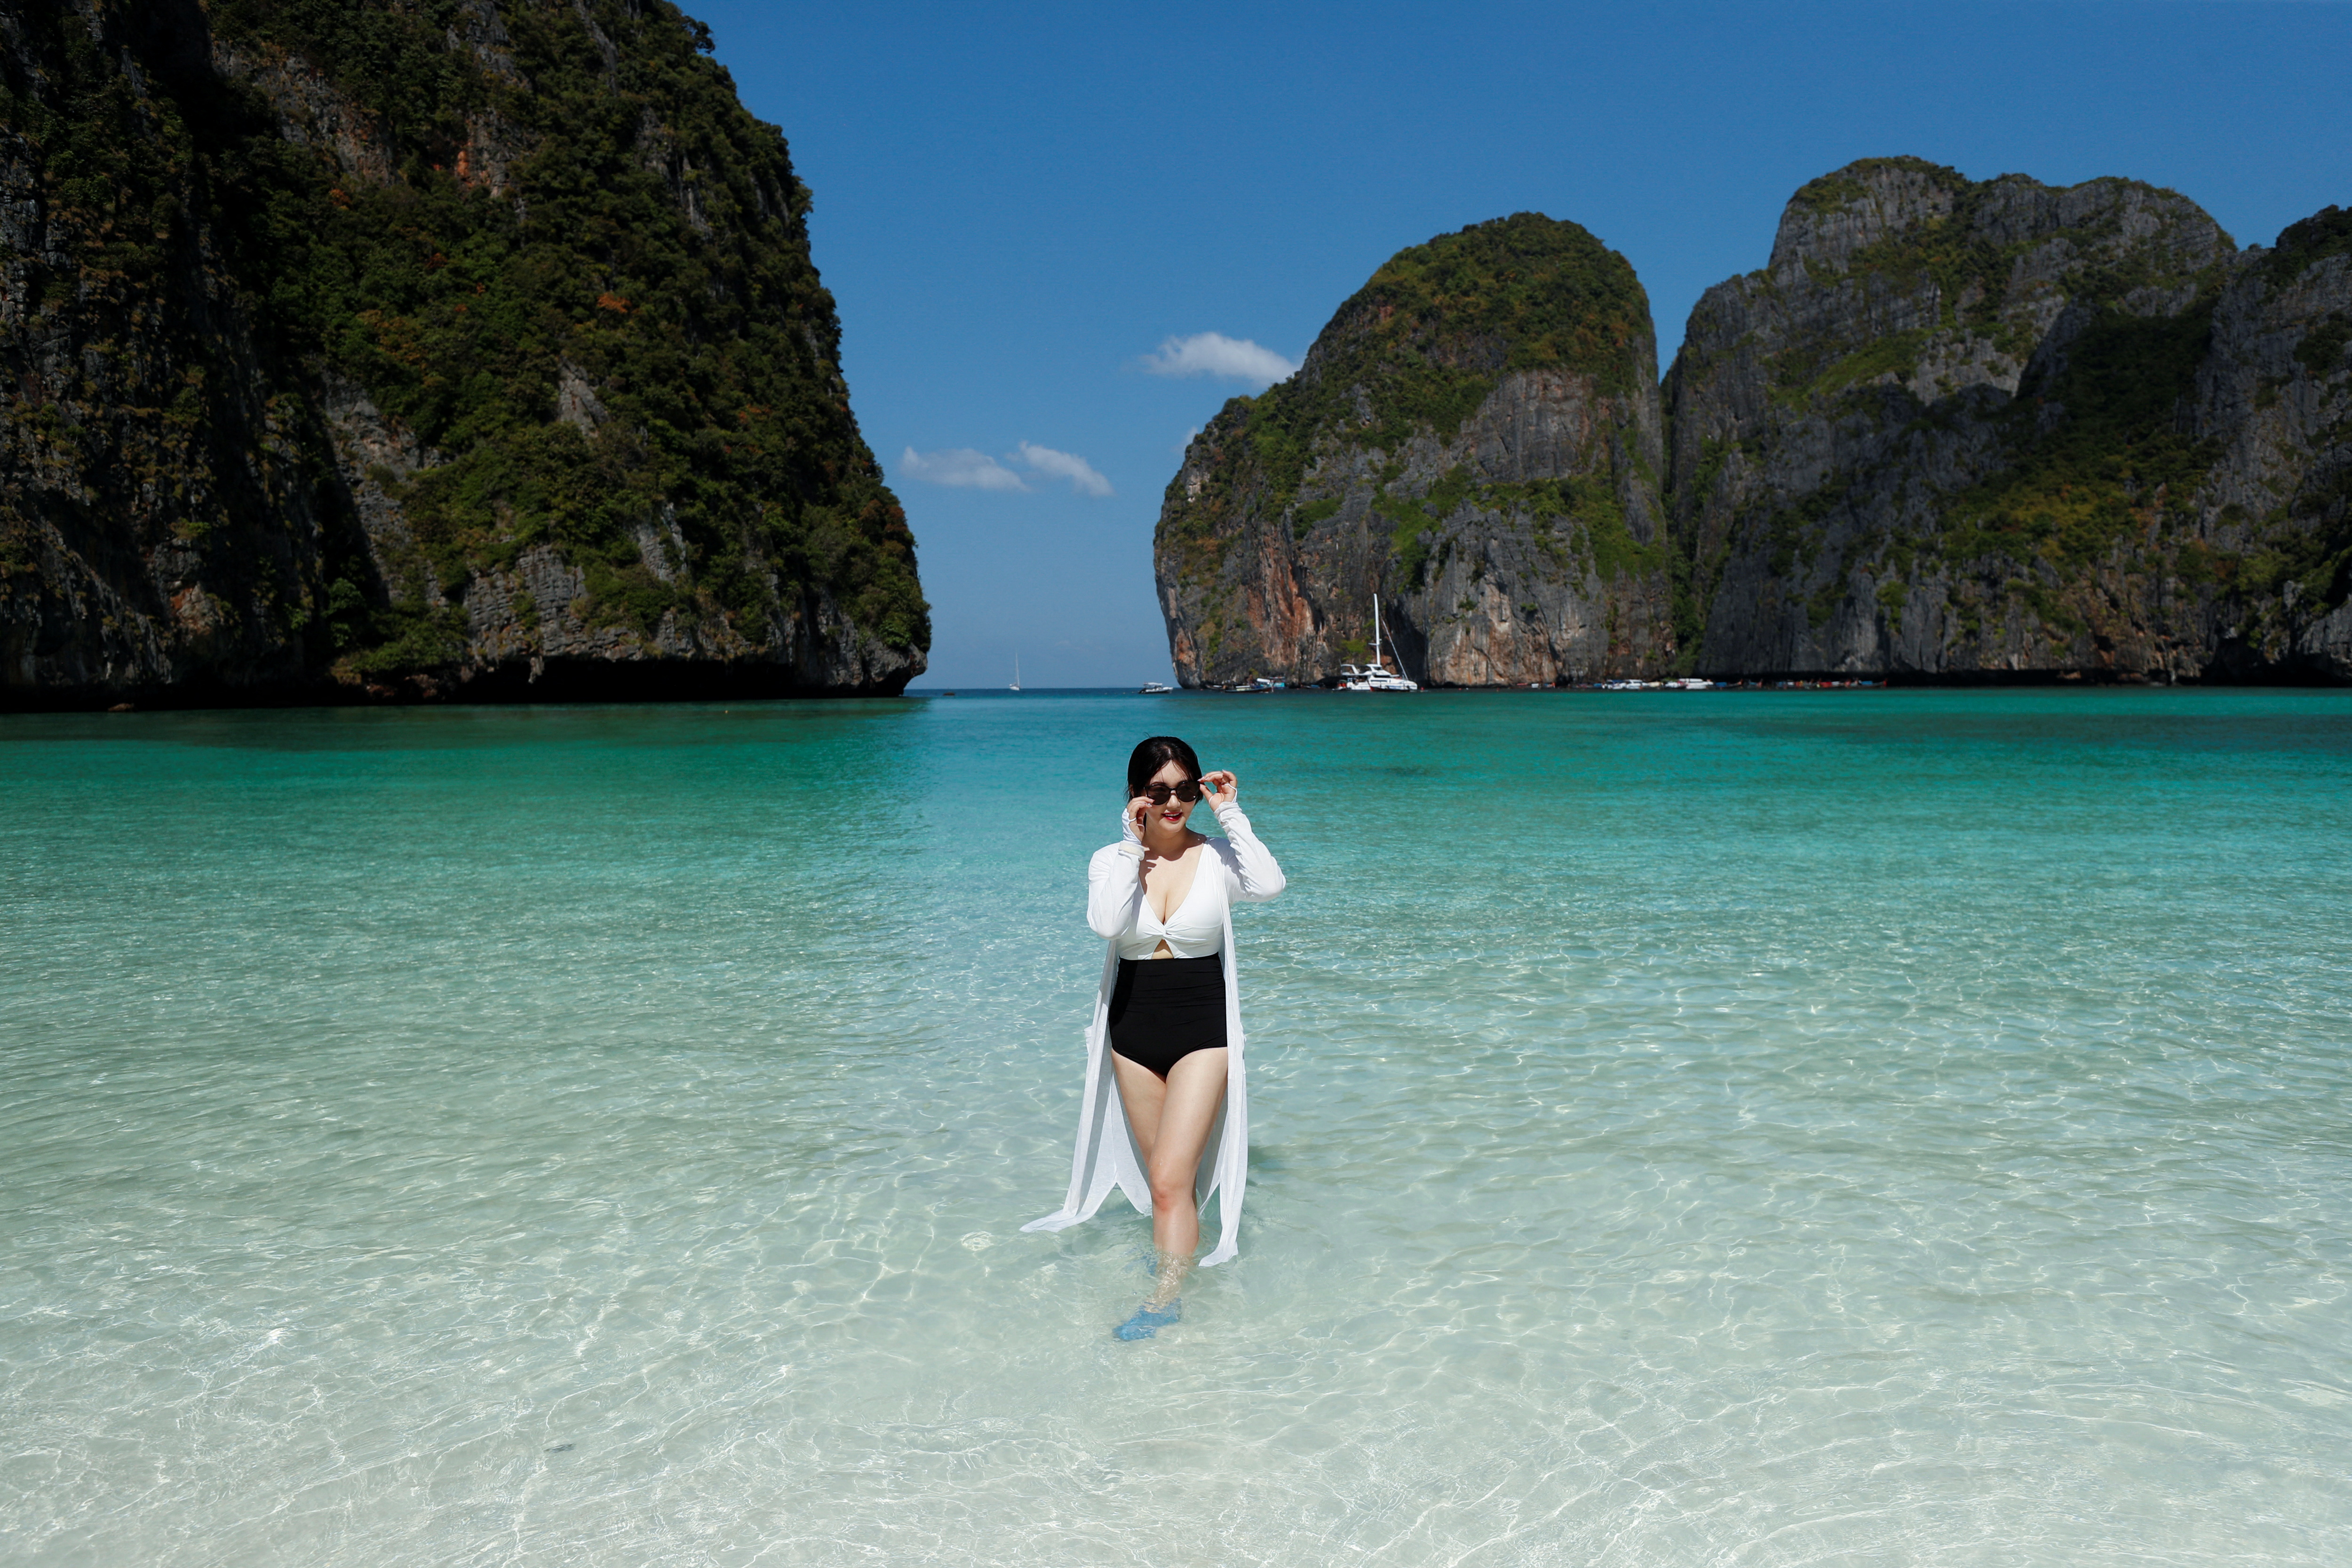 The Beach Scene from the movie The Beach - Maya Bay, Thailand 